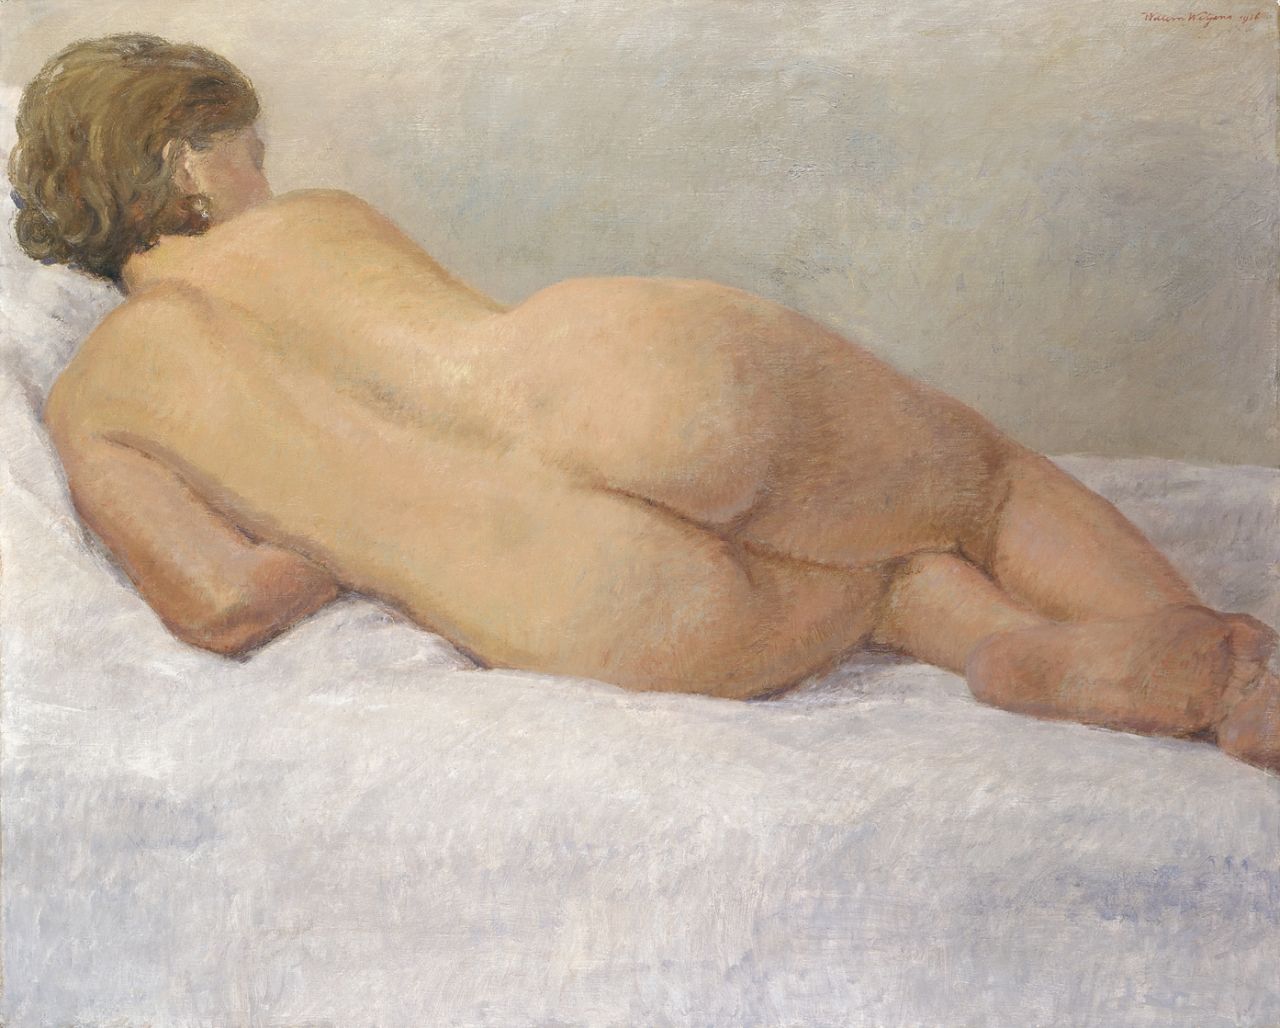 Witjens J.W.H.  | Jan 'Willem' Hendrik  Witjens, A reclining nude, Öl auf Leinwand 96,5 x 120,0 cm, signed u.r. und dated 1936